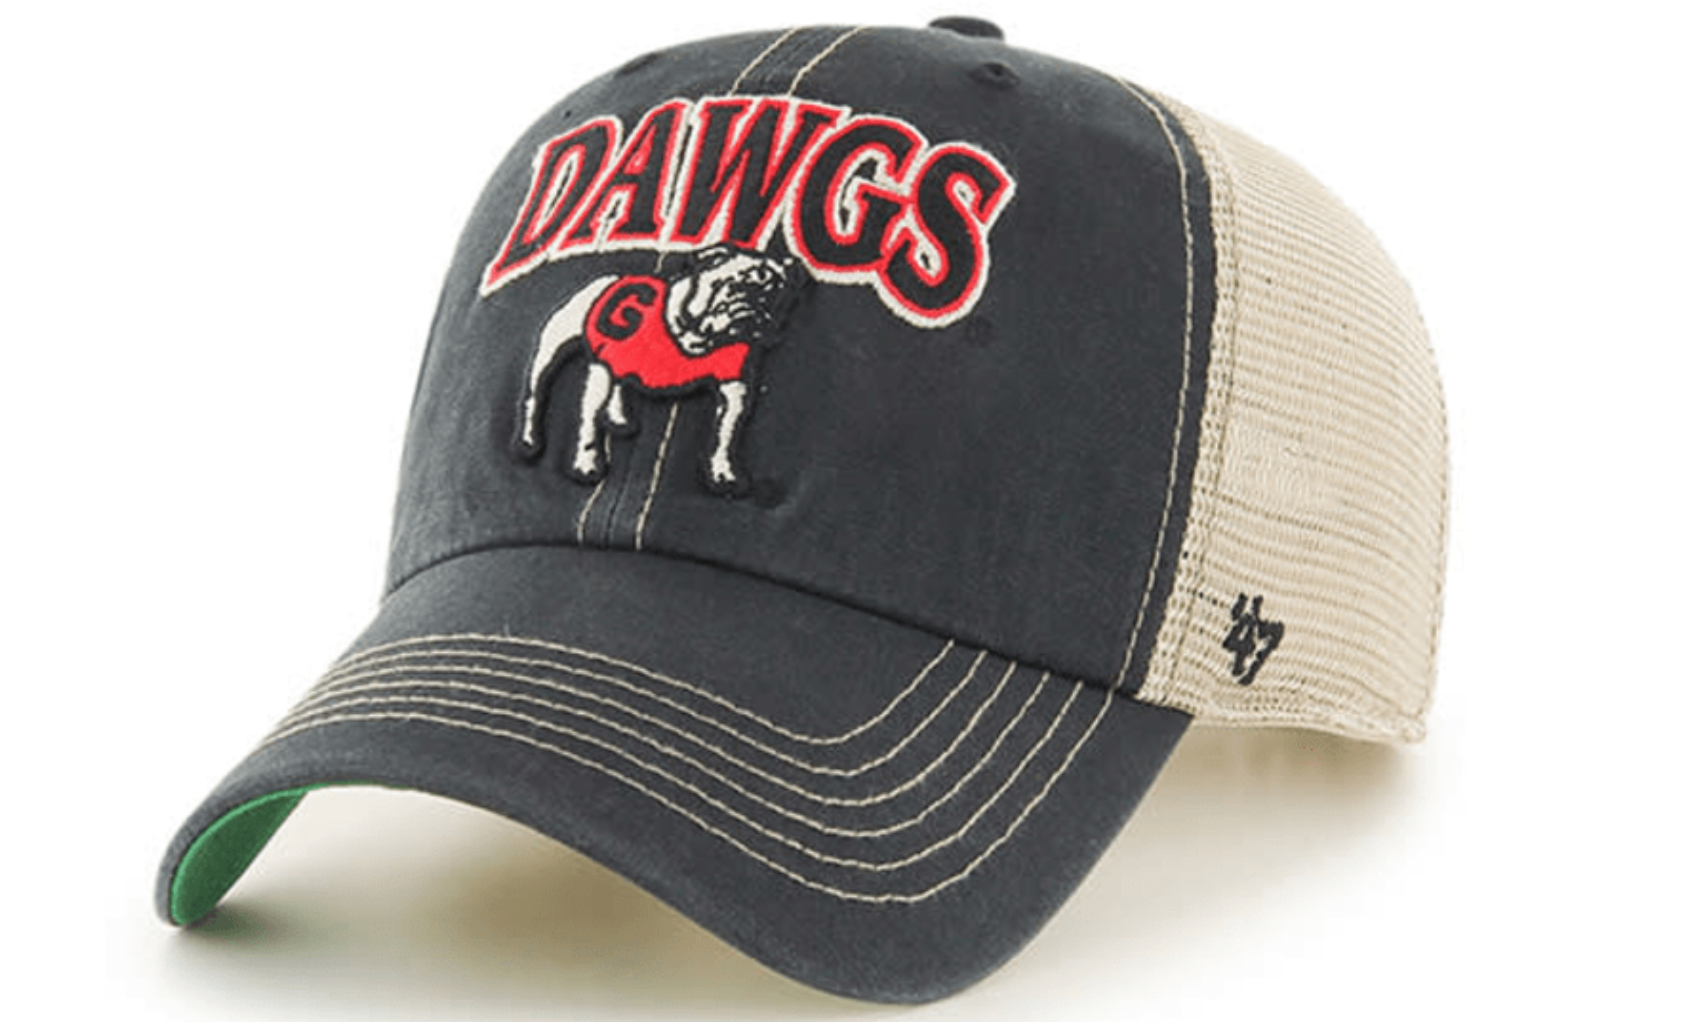 New* Dawgs Junkyard Trucker Hat